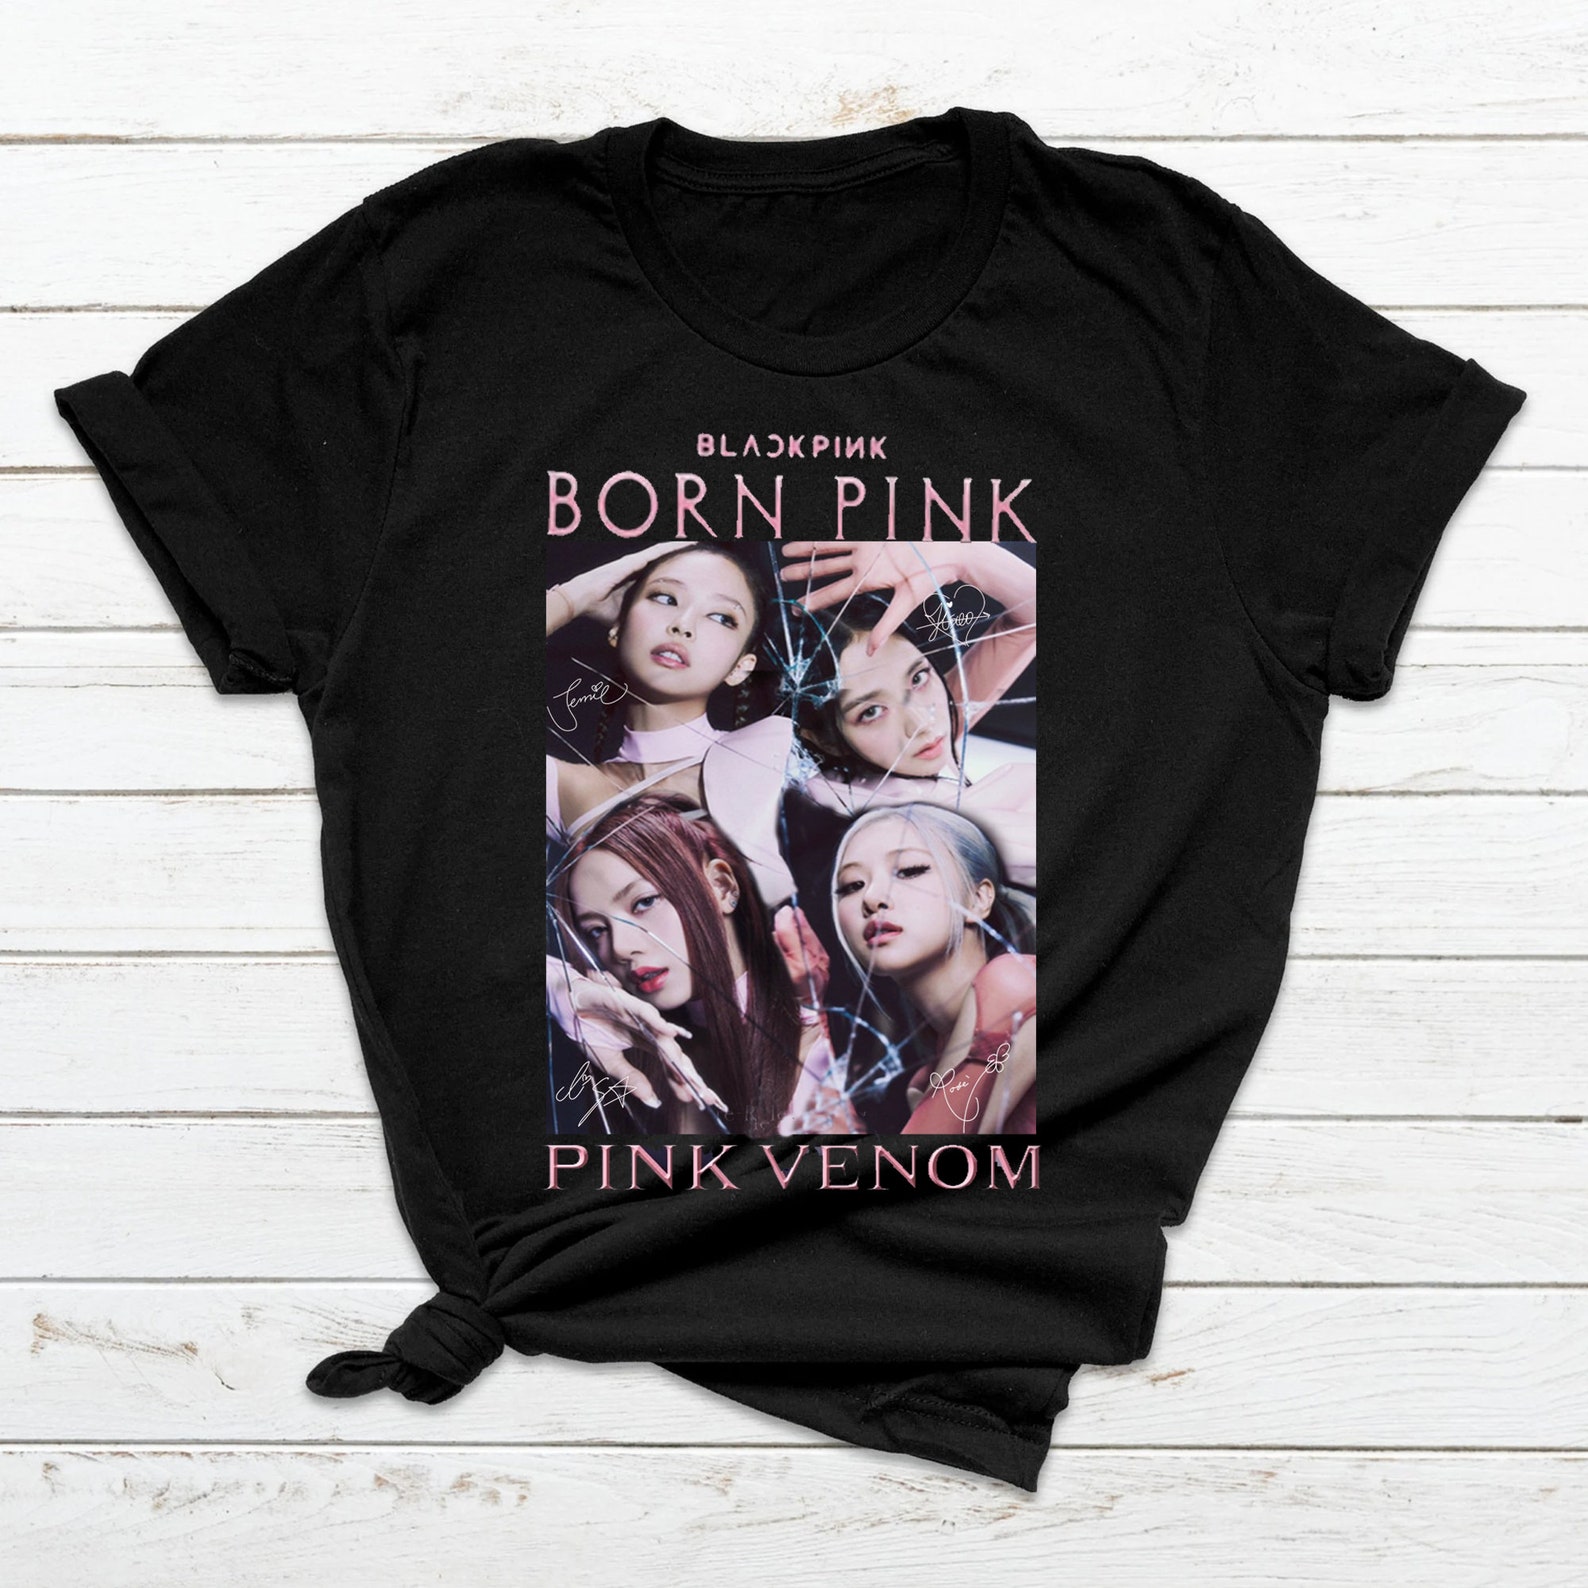 Blackpink 2022 Tour Shirt Born Pink the Comeback Shirt Shirt - Etsy